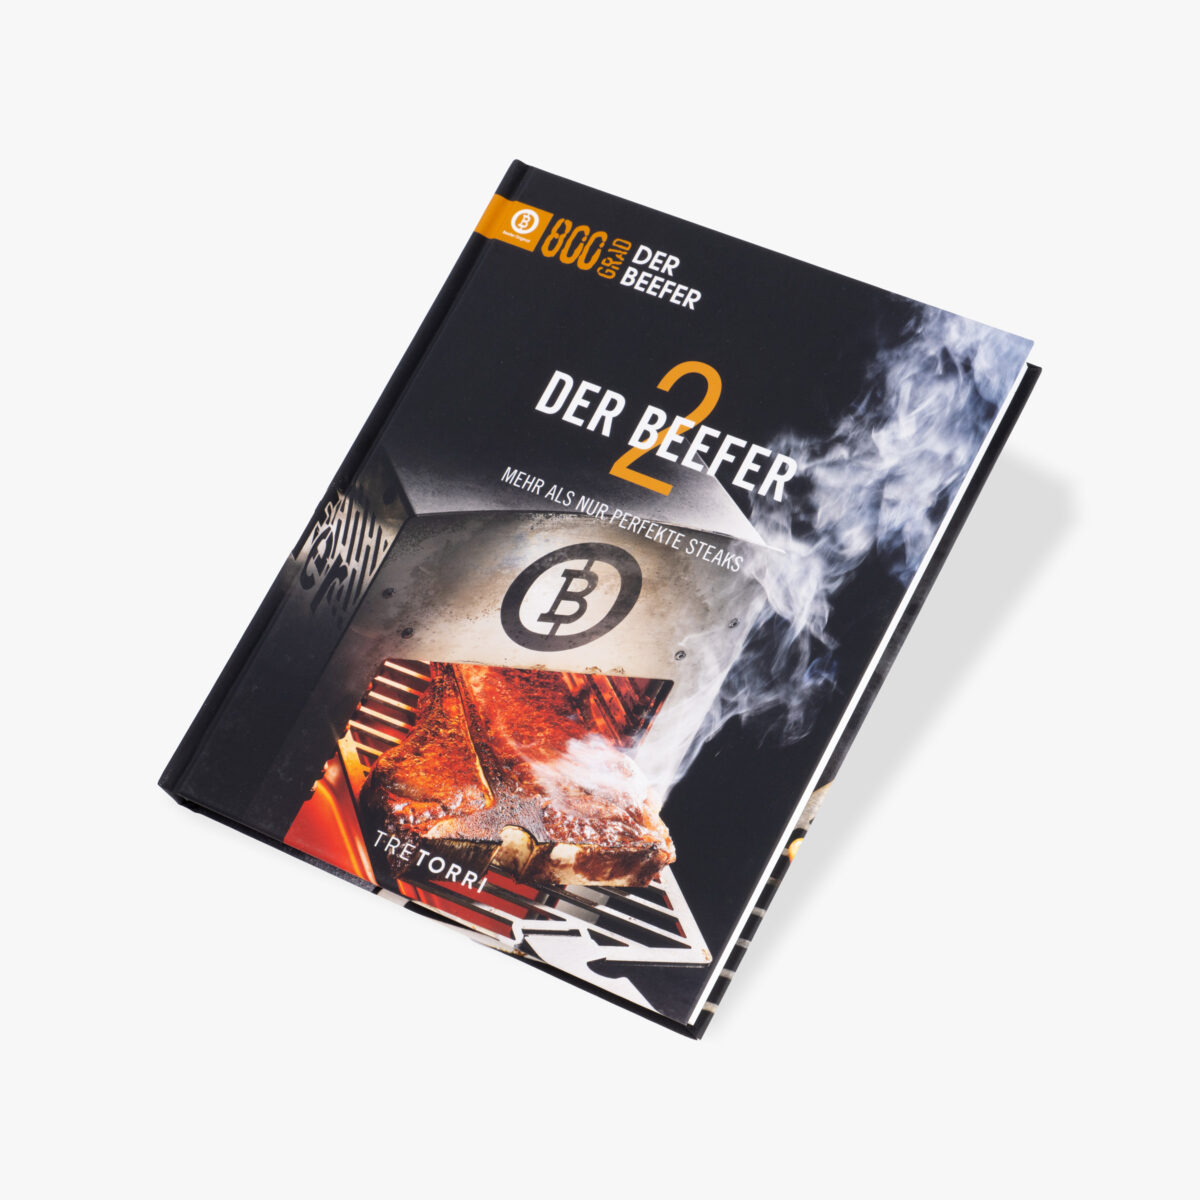 Beefer Buch Band 2 - das Buch zum 800 Grad Grill